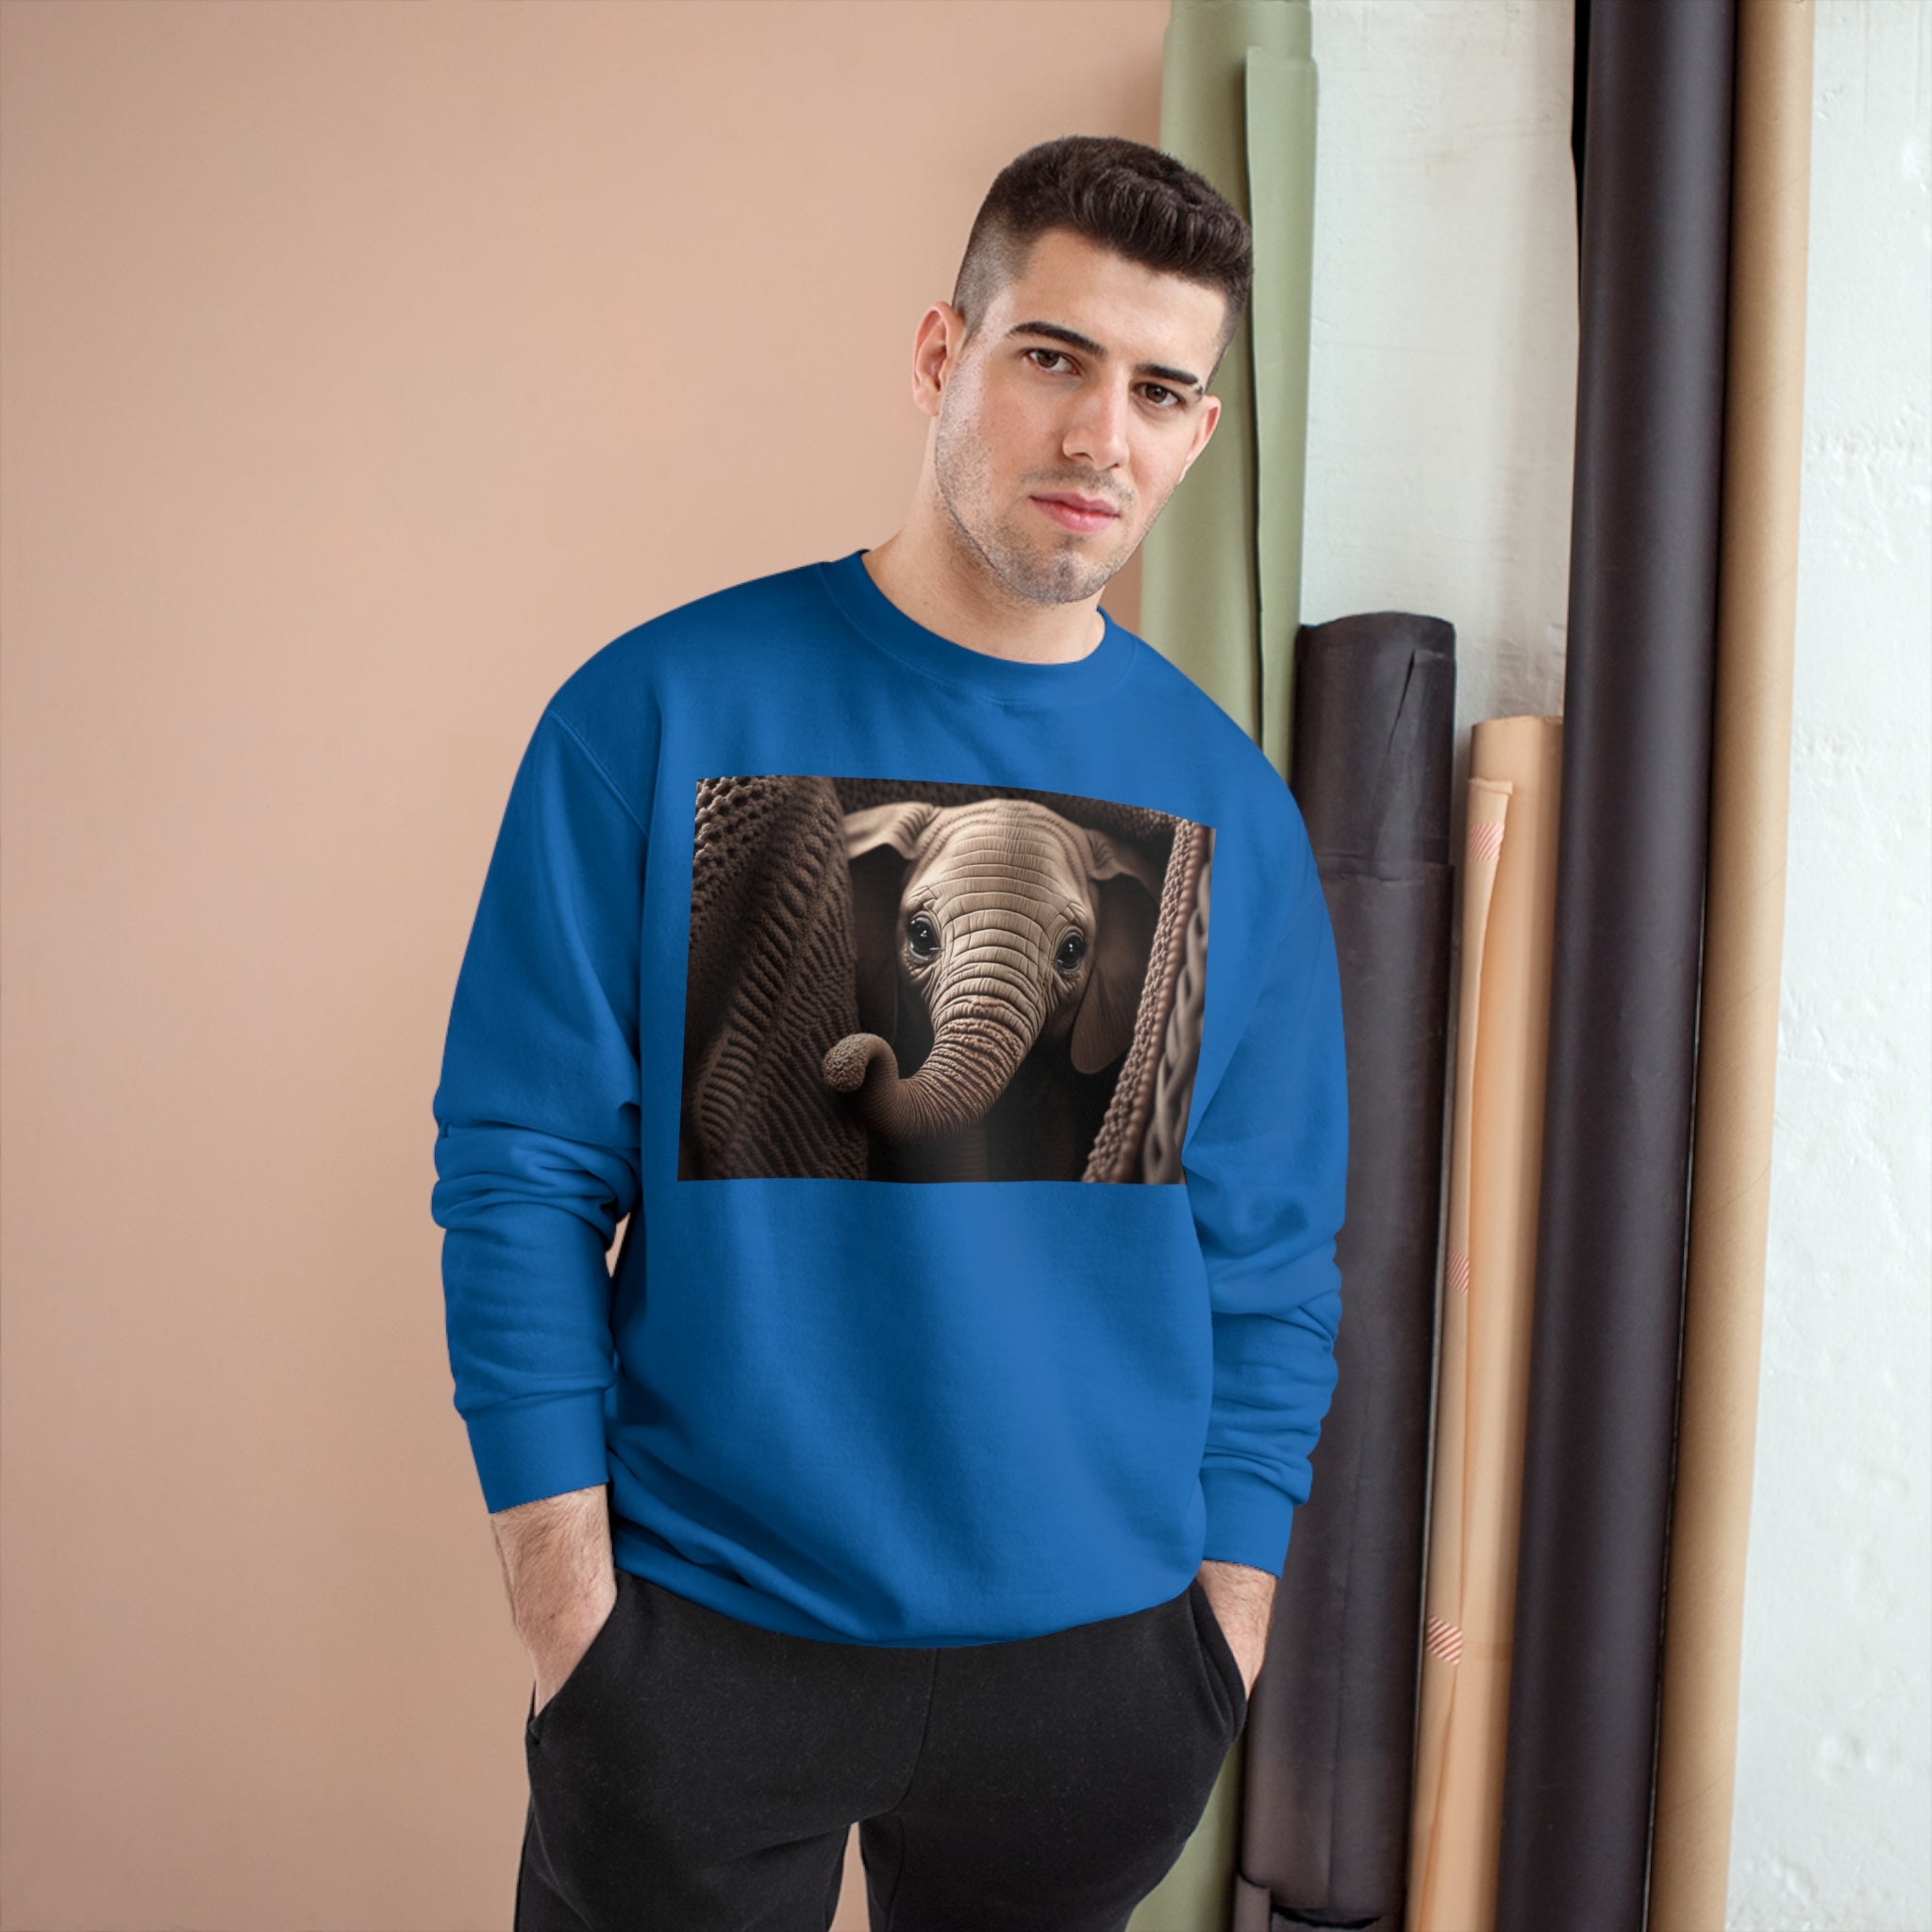 Champion Sweatshirt - Knit Animals, Elephant Calf